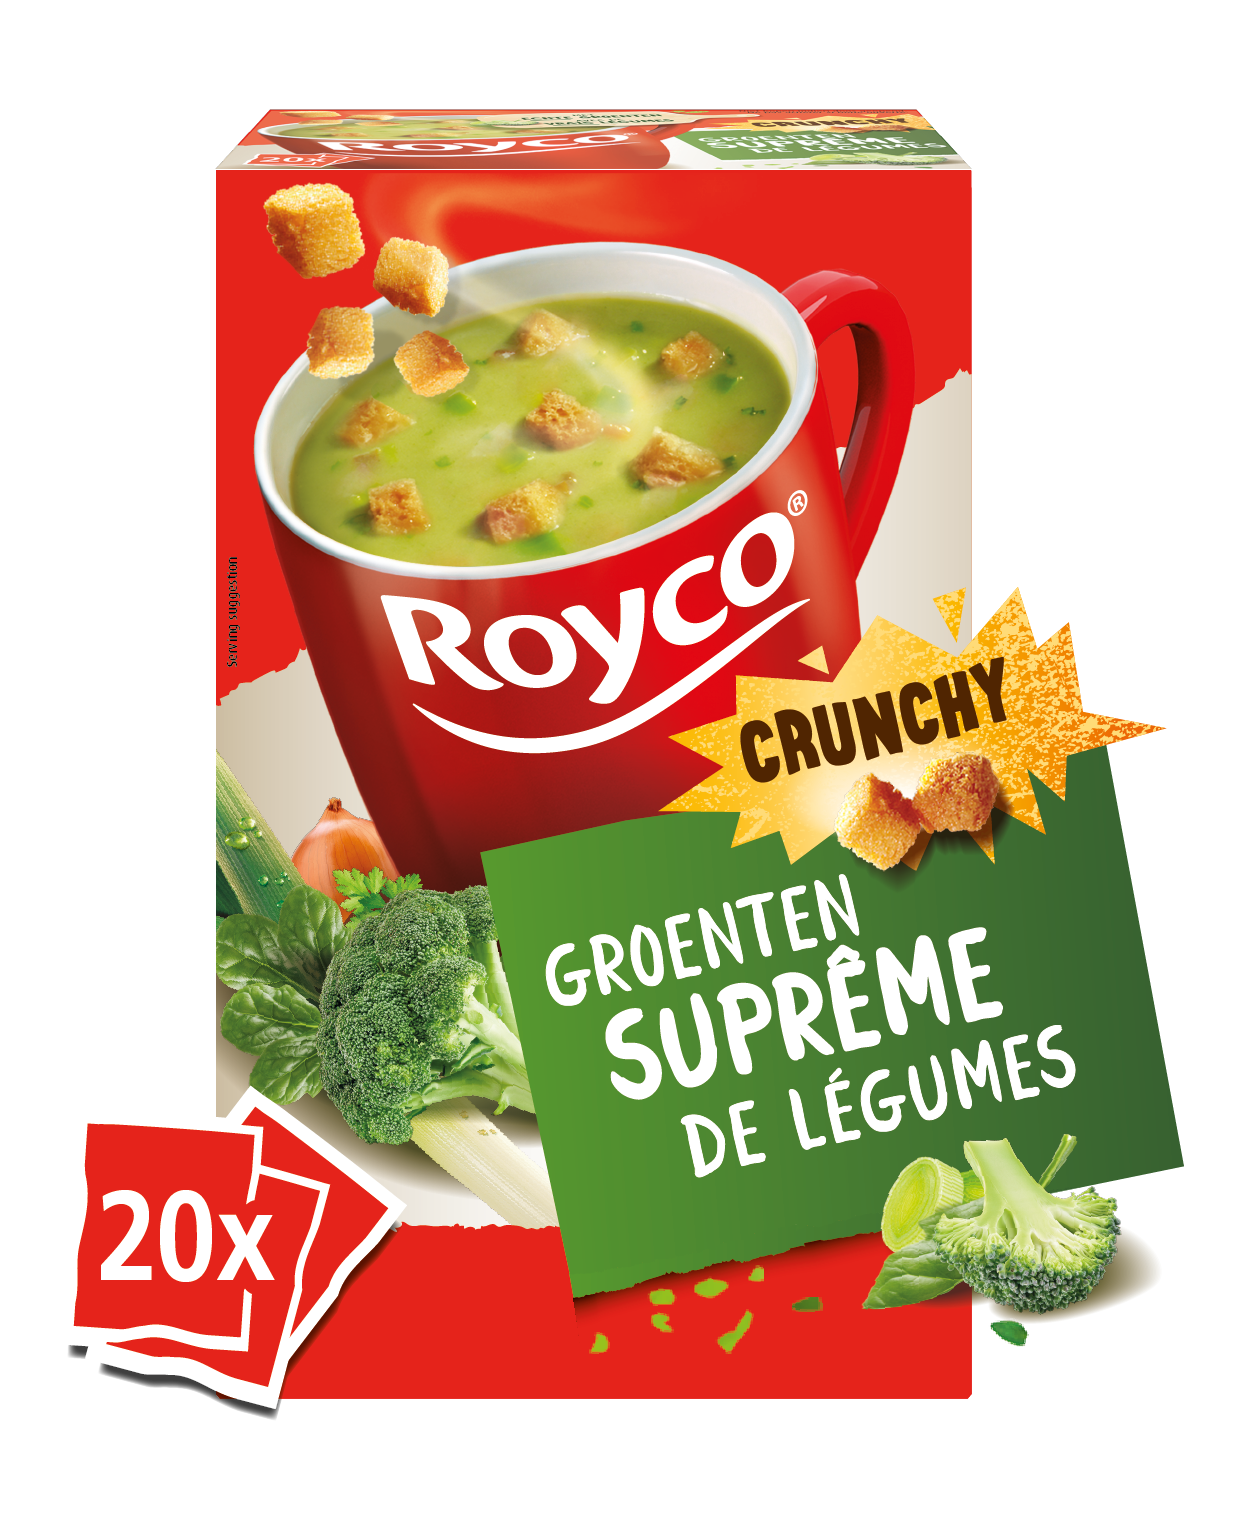 Royco Crunchy Suprême de Légumes